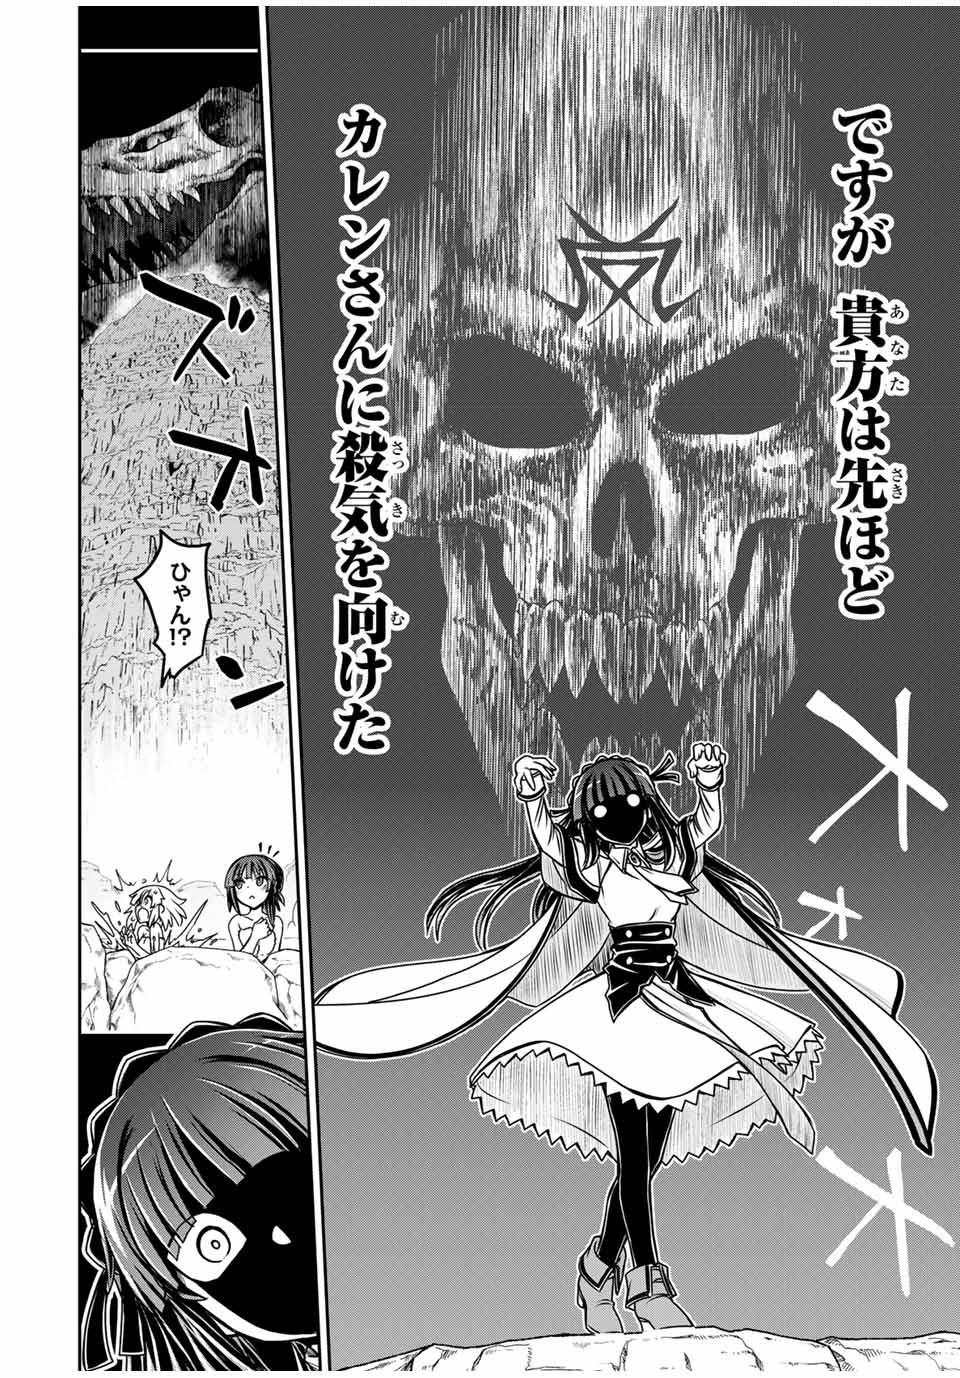 Nengan no Akuyaku Reijou (Last Boss) no Karada wo Teniiretazo!  - Chapter 22 - Page 12